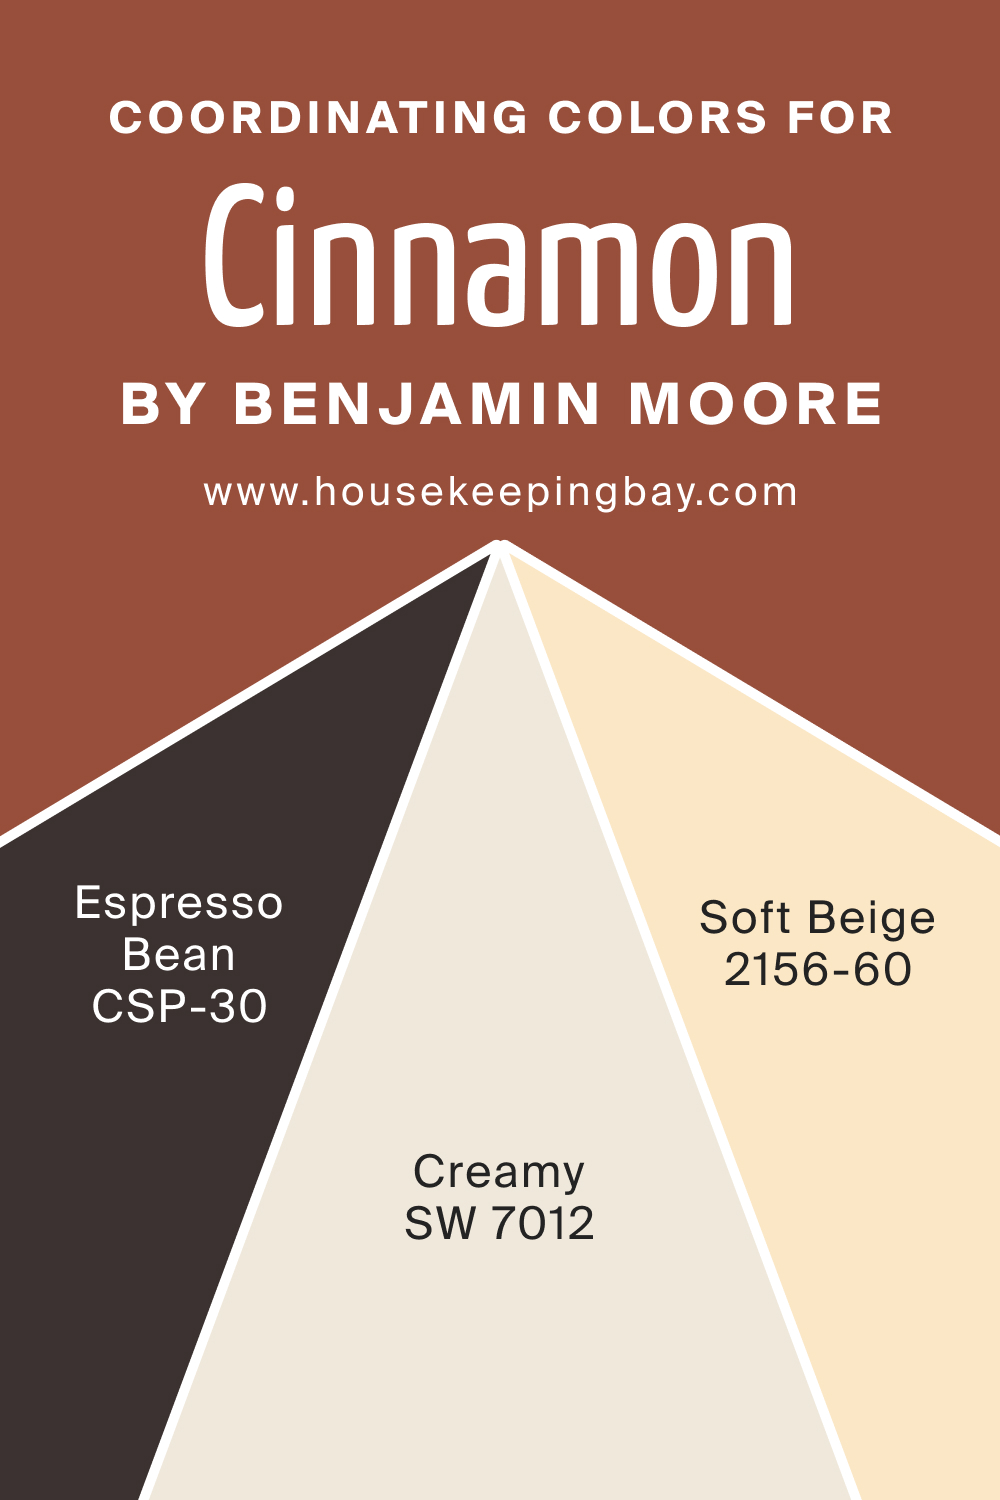 Coordinating Colors for Cinnamon 2174 20 by Benjamin Moore